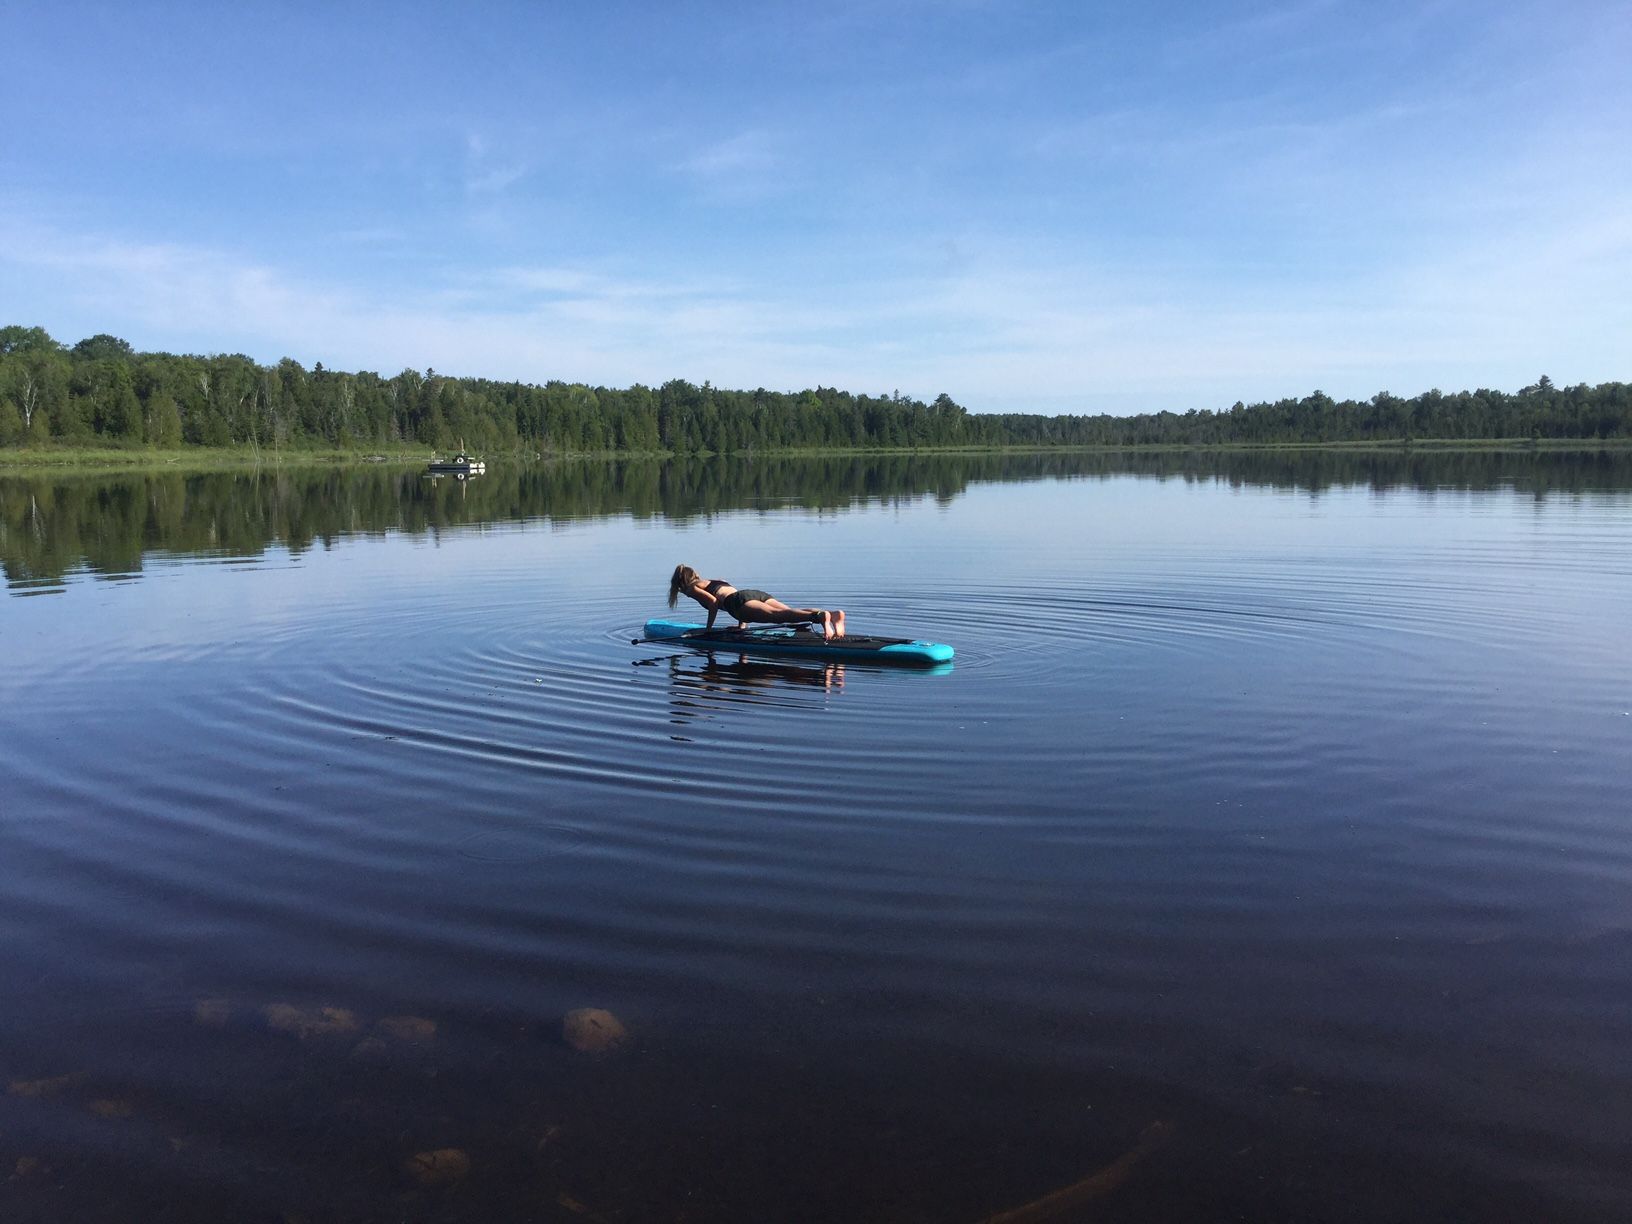 Yoga pose on a paddle board on calm lake